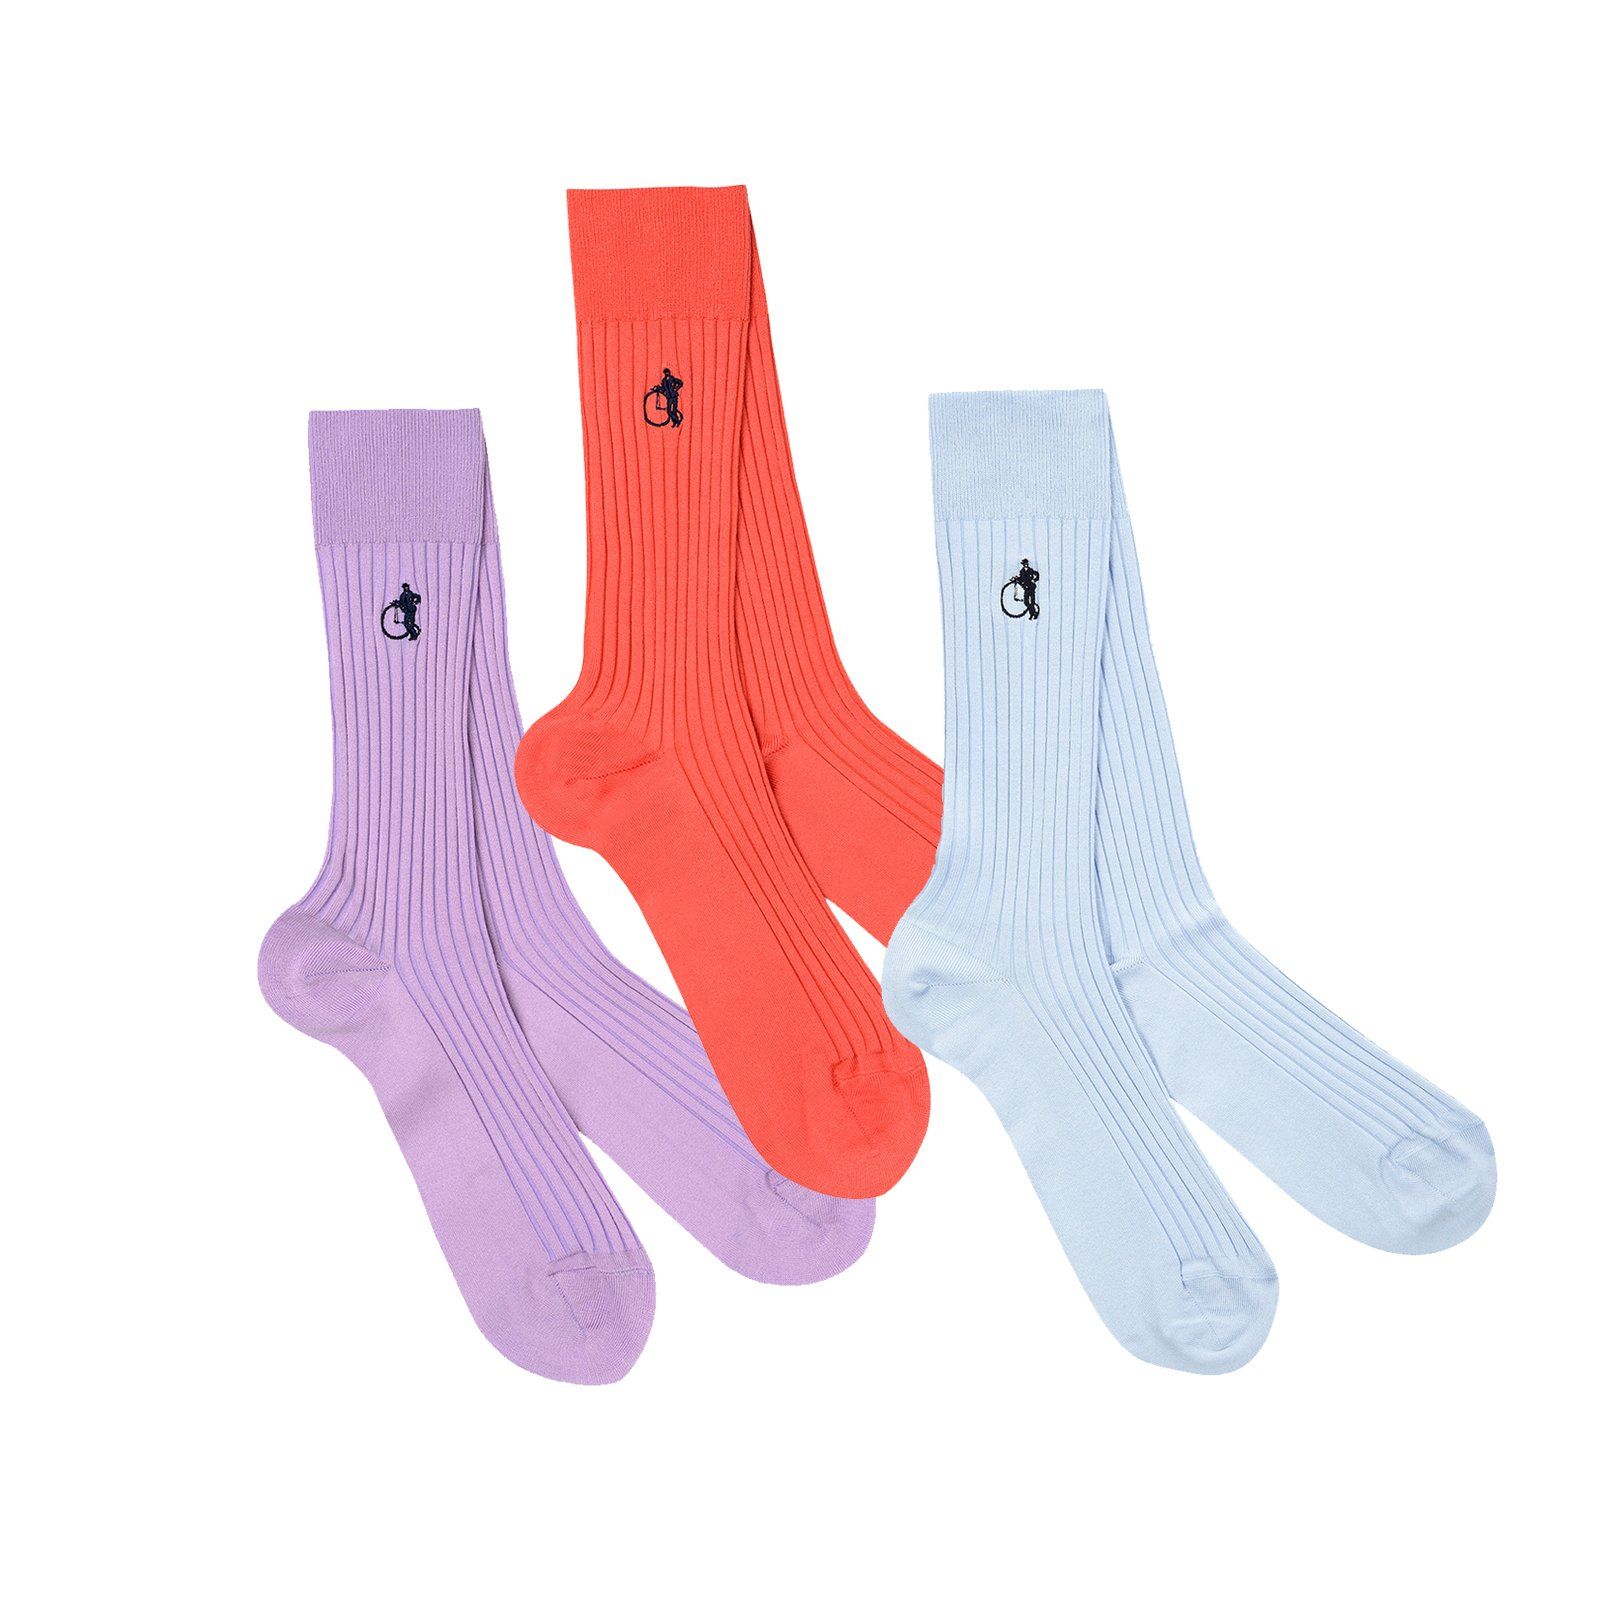 Three socks in pastel shades